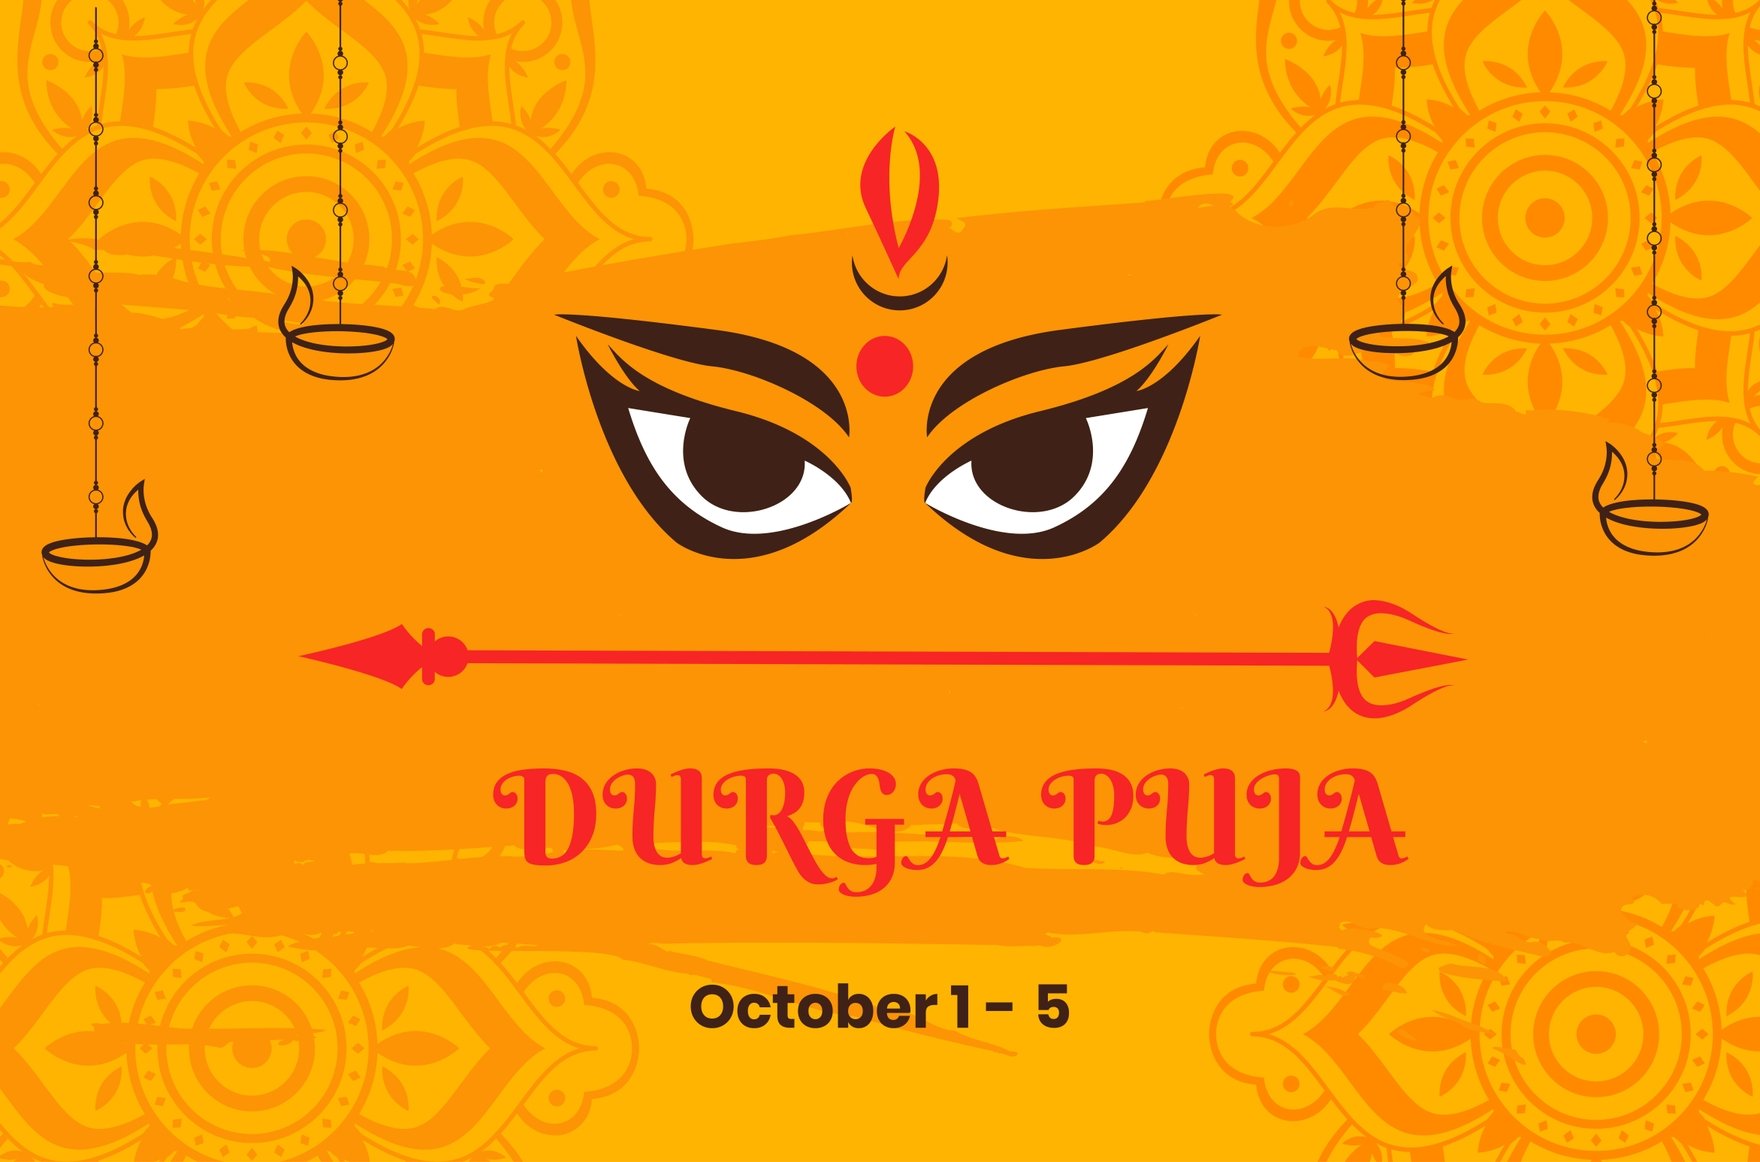 Durga Puja Banner in Illustrator, PSD, EPS, SVG, JPG, PNG